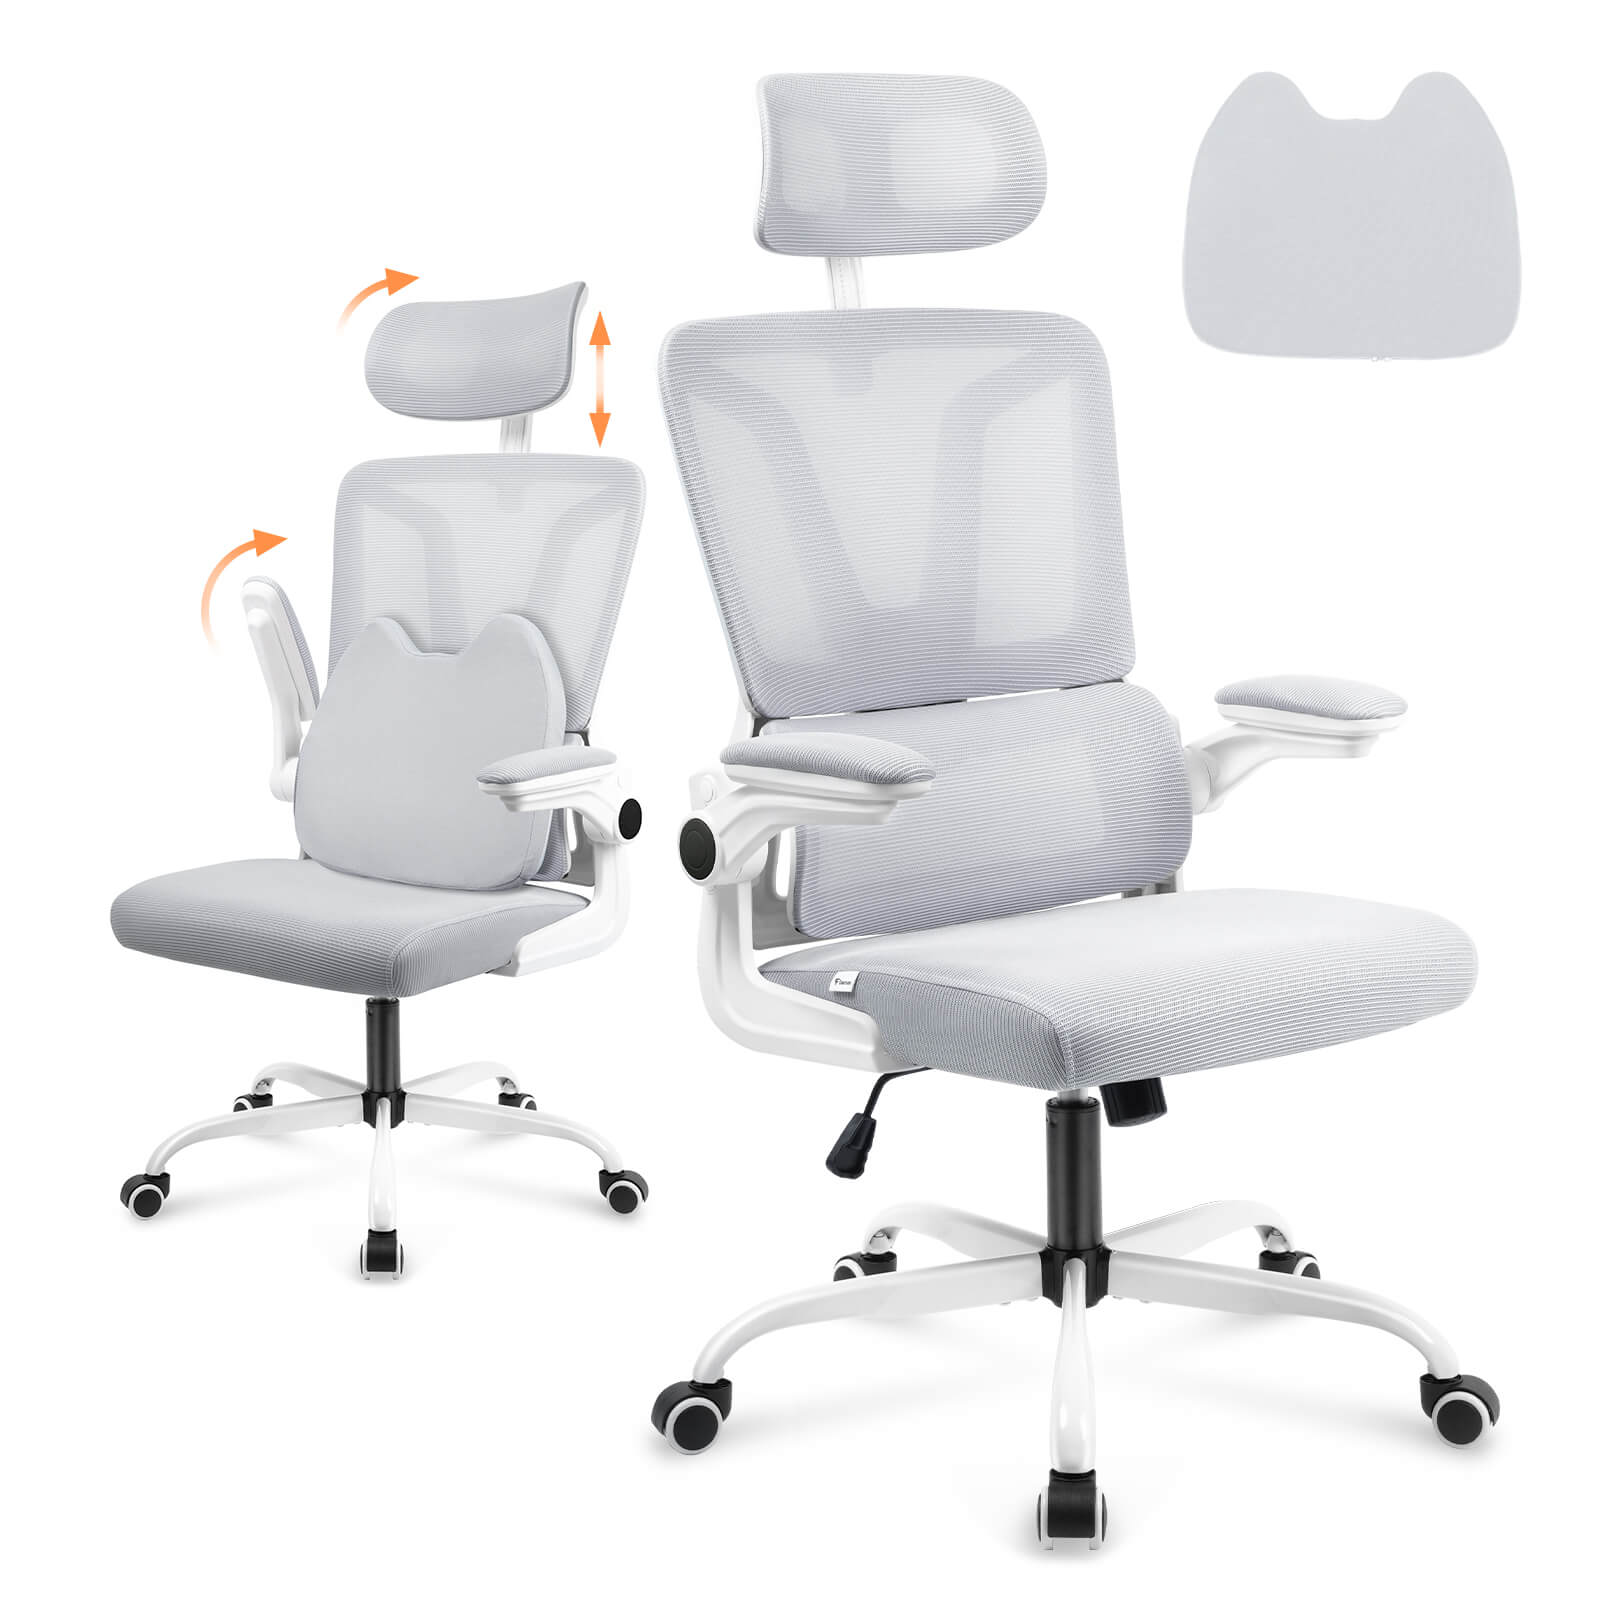 Soontrans Ergonomic Breathable Mesh Office Chair - White Gray